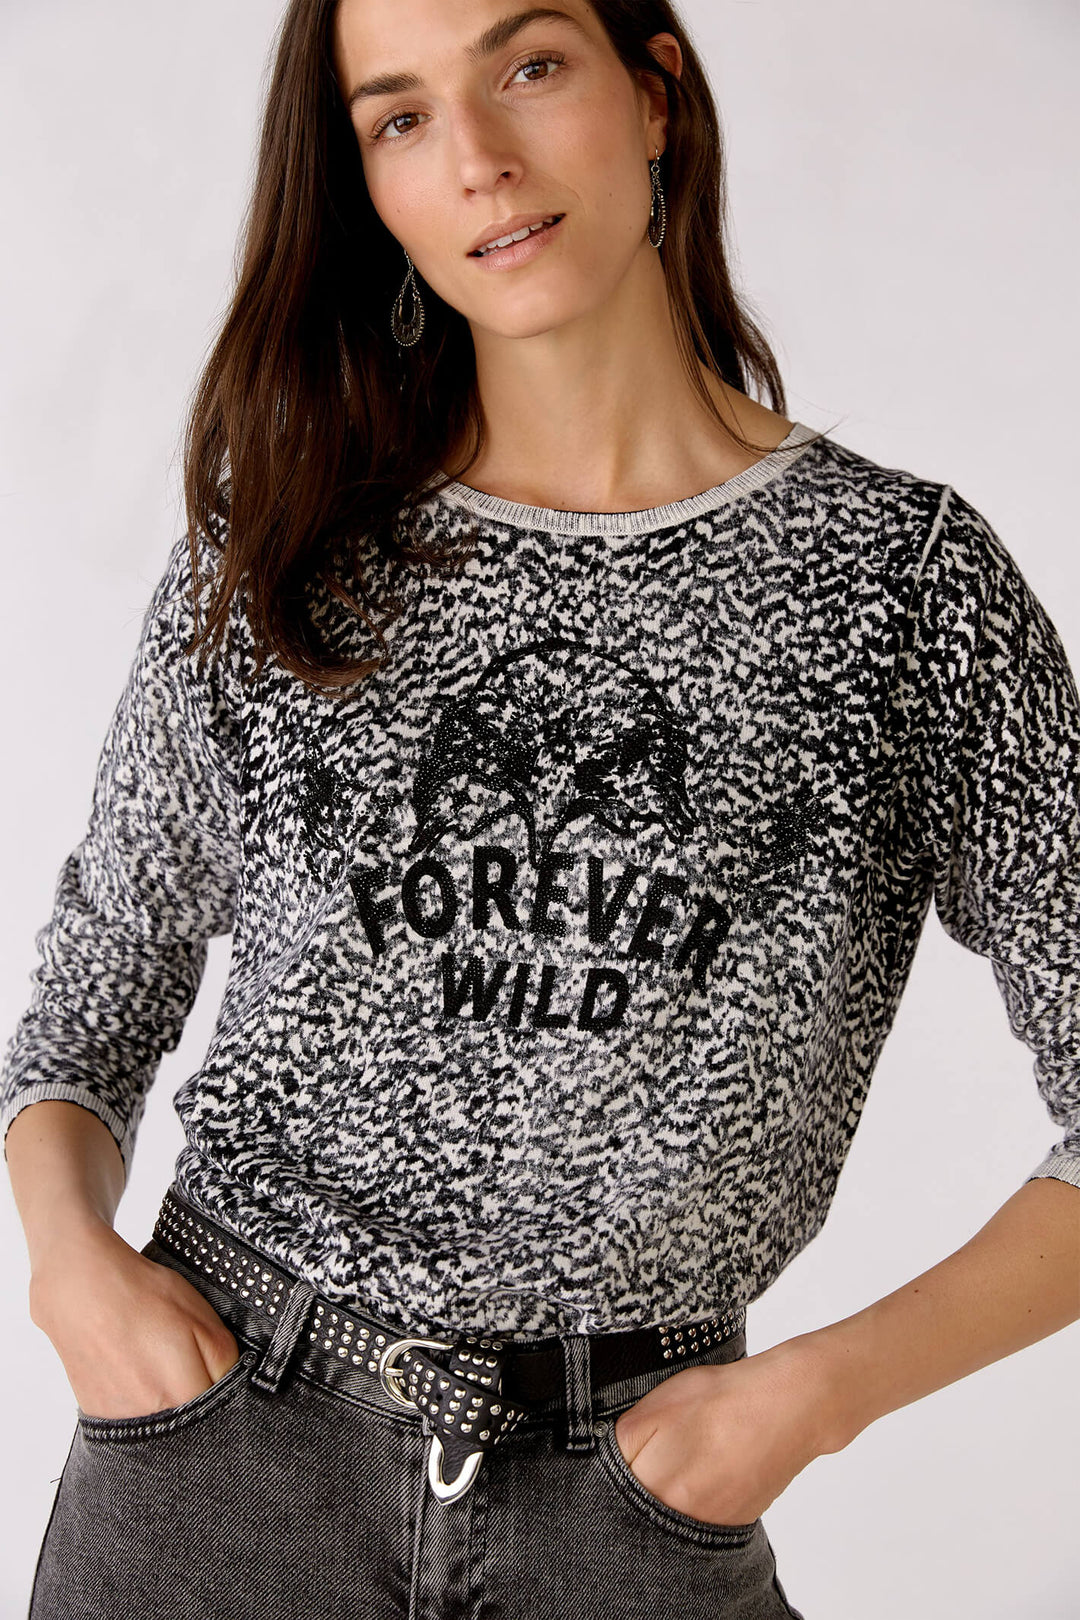 Oui 76926 White Black Forever Wild Motif Jumper - Olivia Grace Fashion